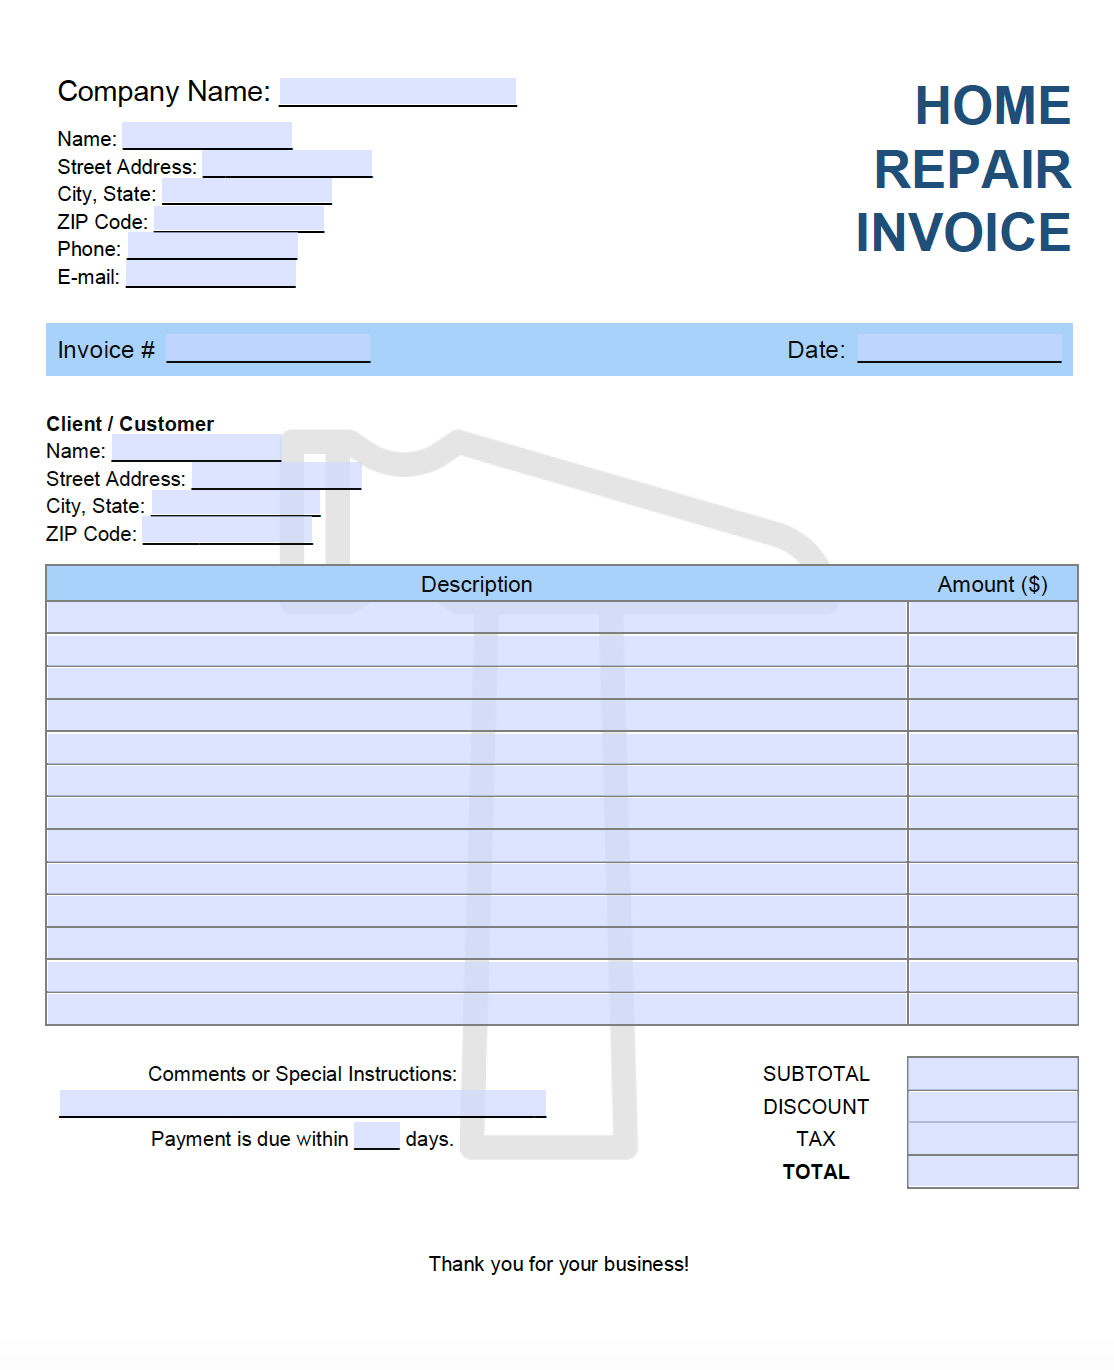 Free Home Repair Invoice Template  PDF  WORD  EXCEL Intended For Cell Phone Repair Invoice Template